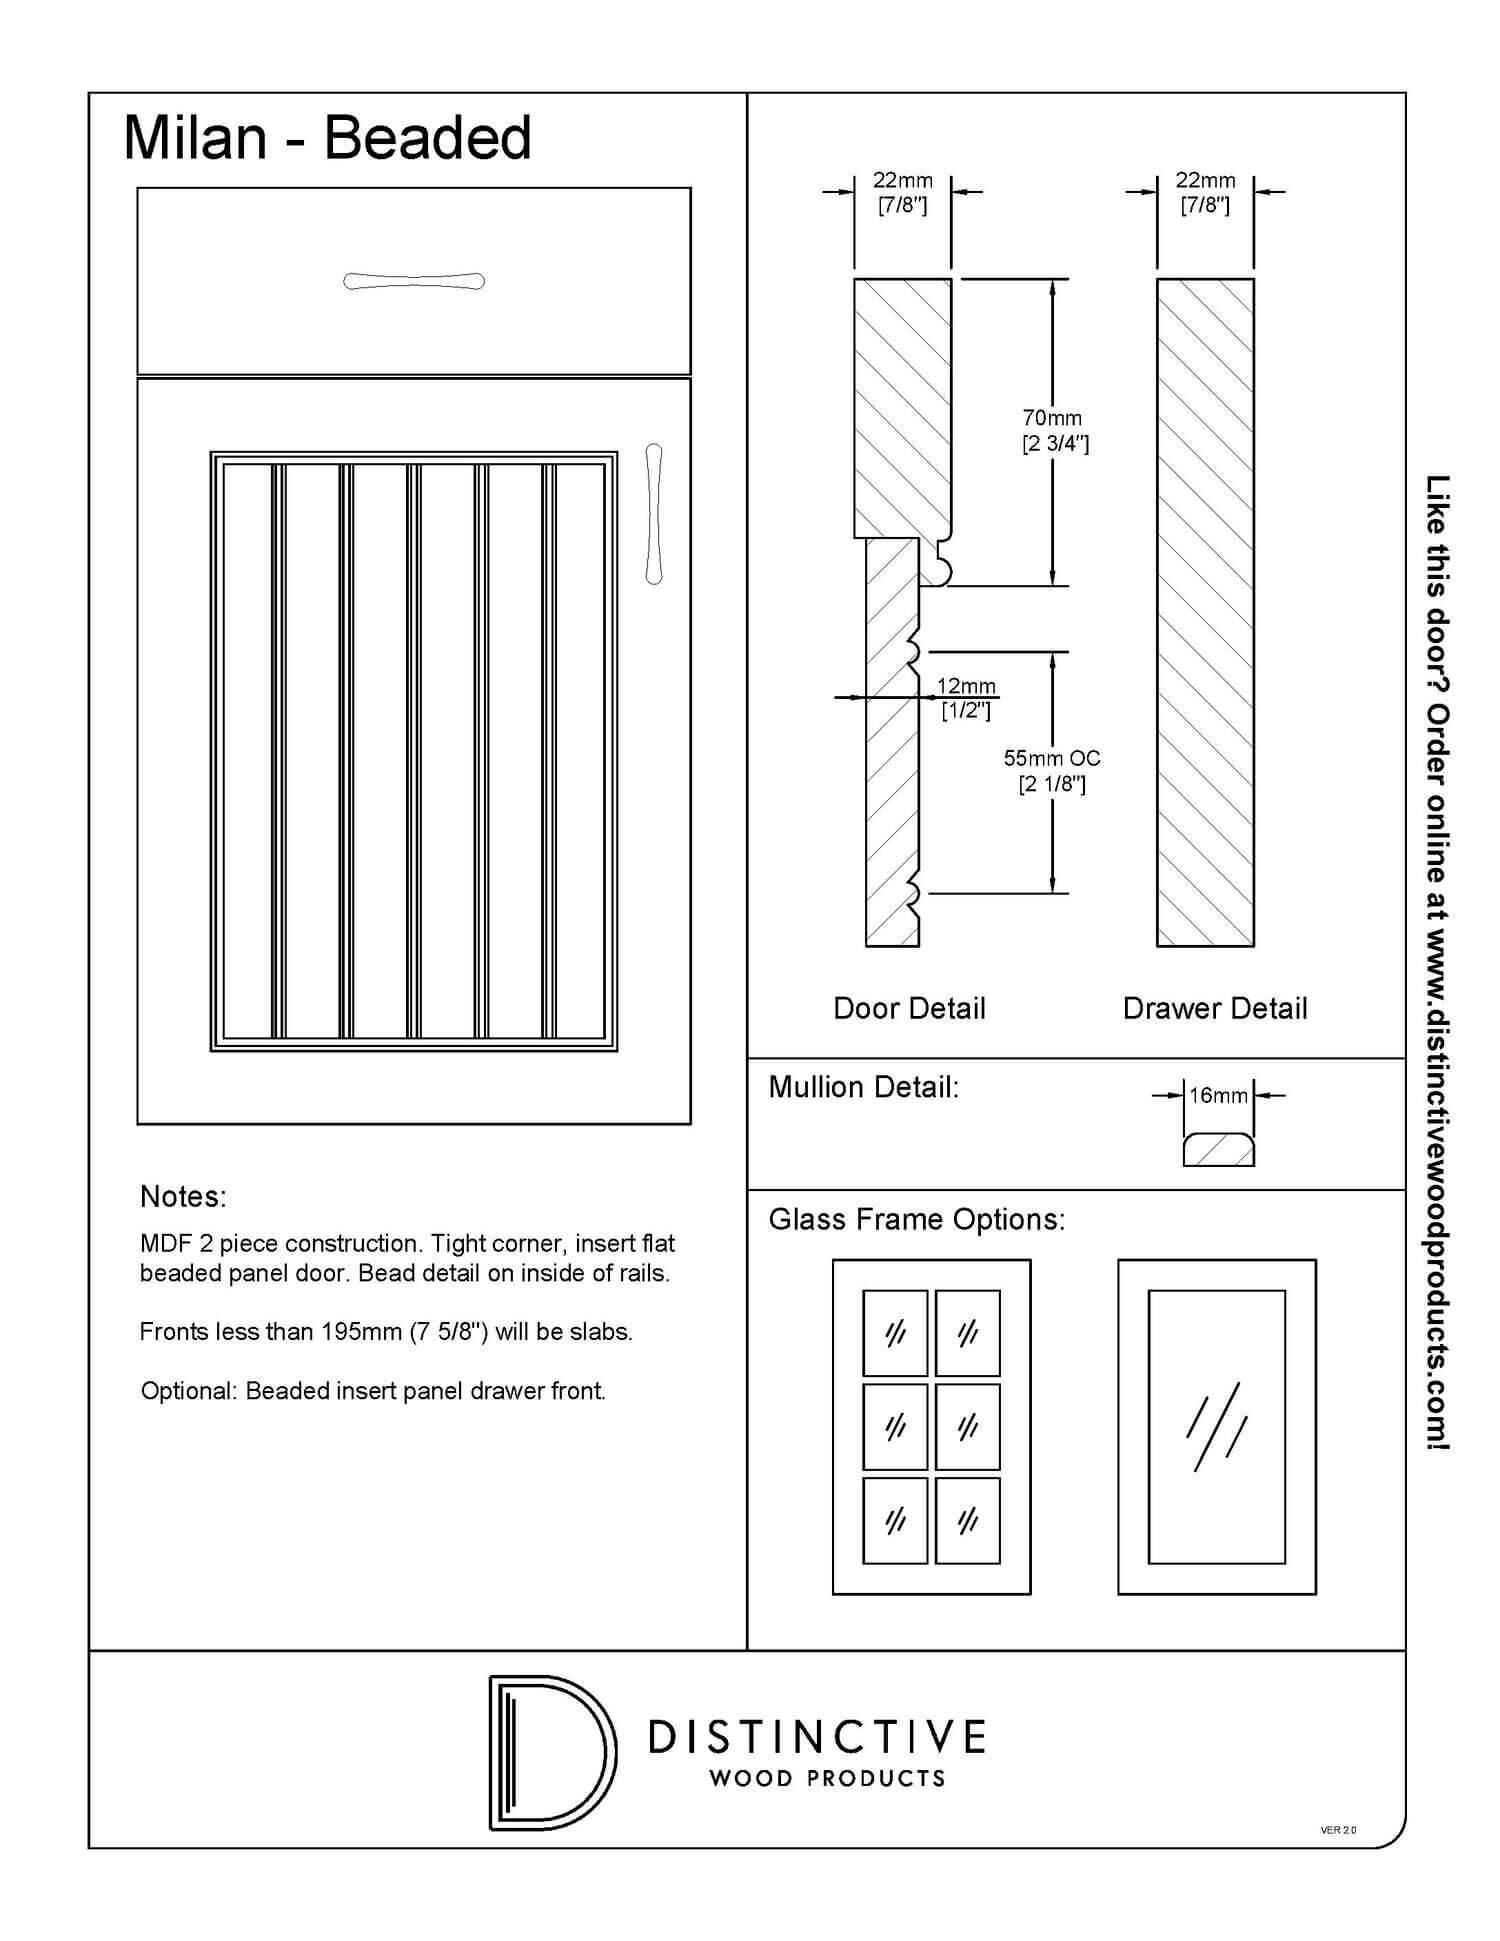 Milan - Beaded - MDF Cabinet Door Designs | Distinctive Wood Products